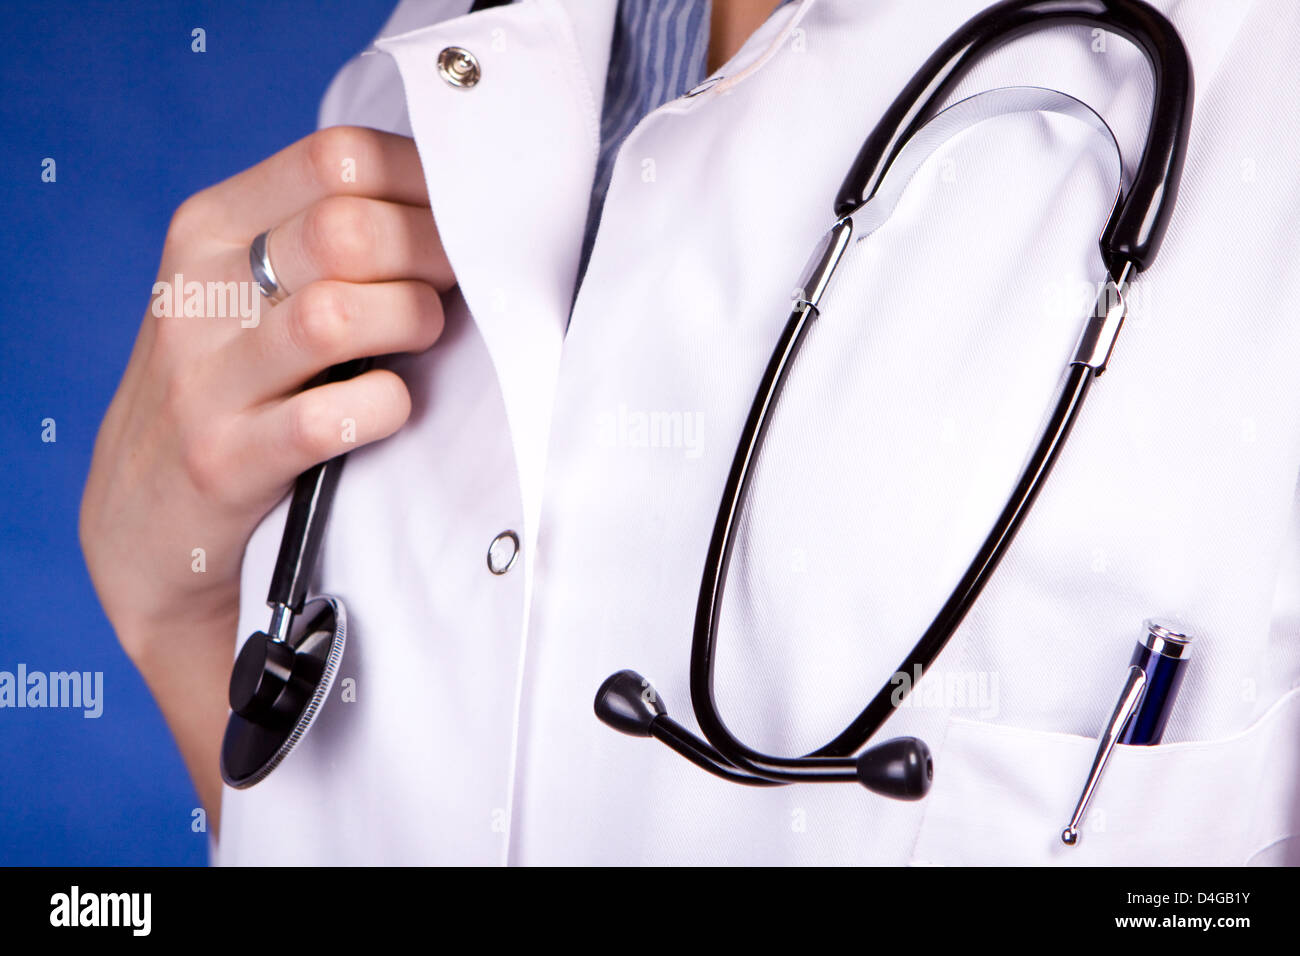 Nurse or doctor holding stethoscope in white scrubs Stock Photo